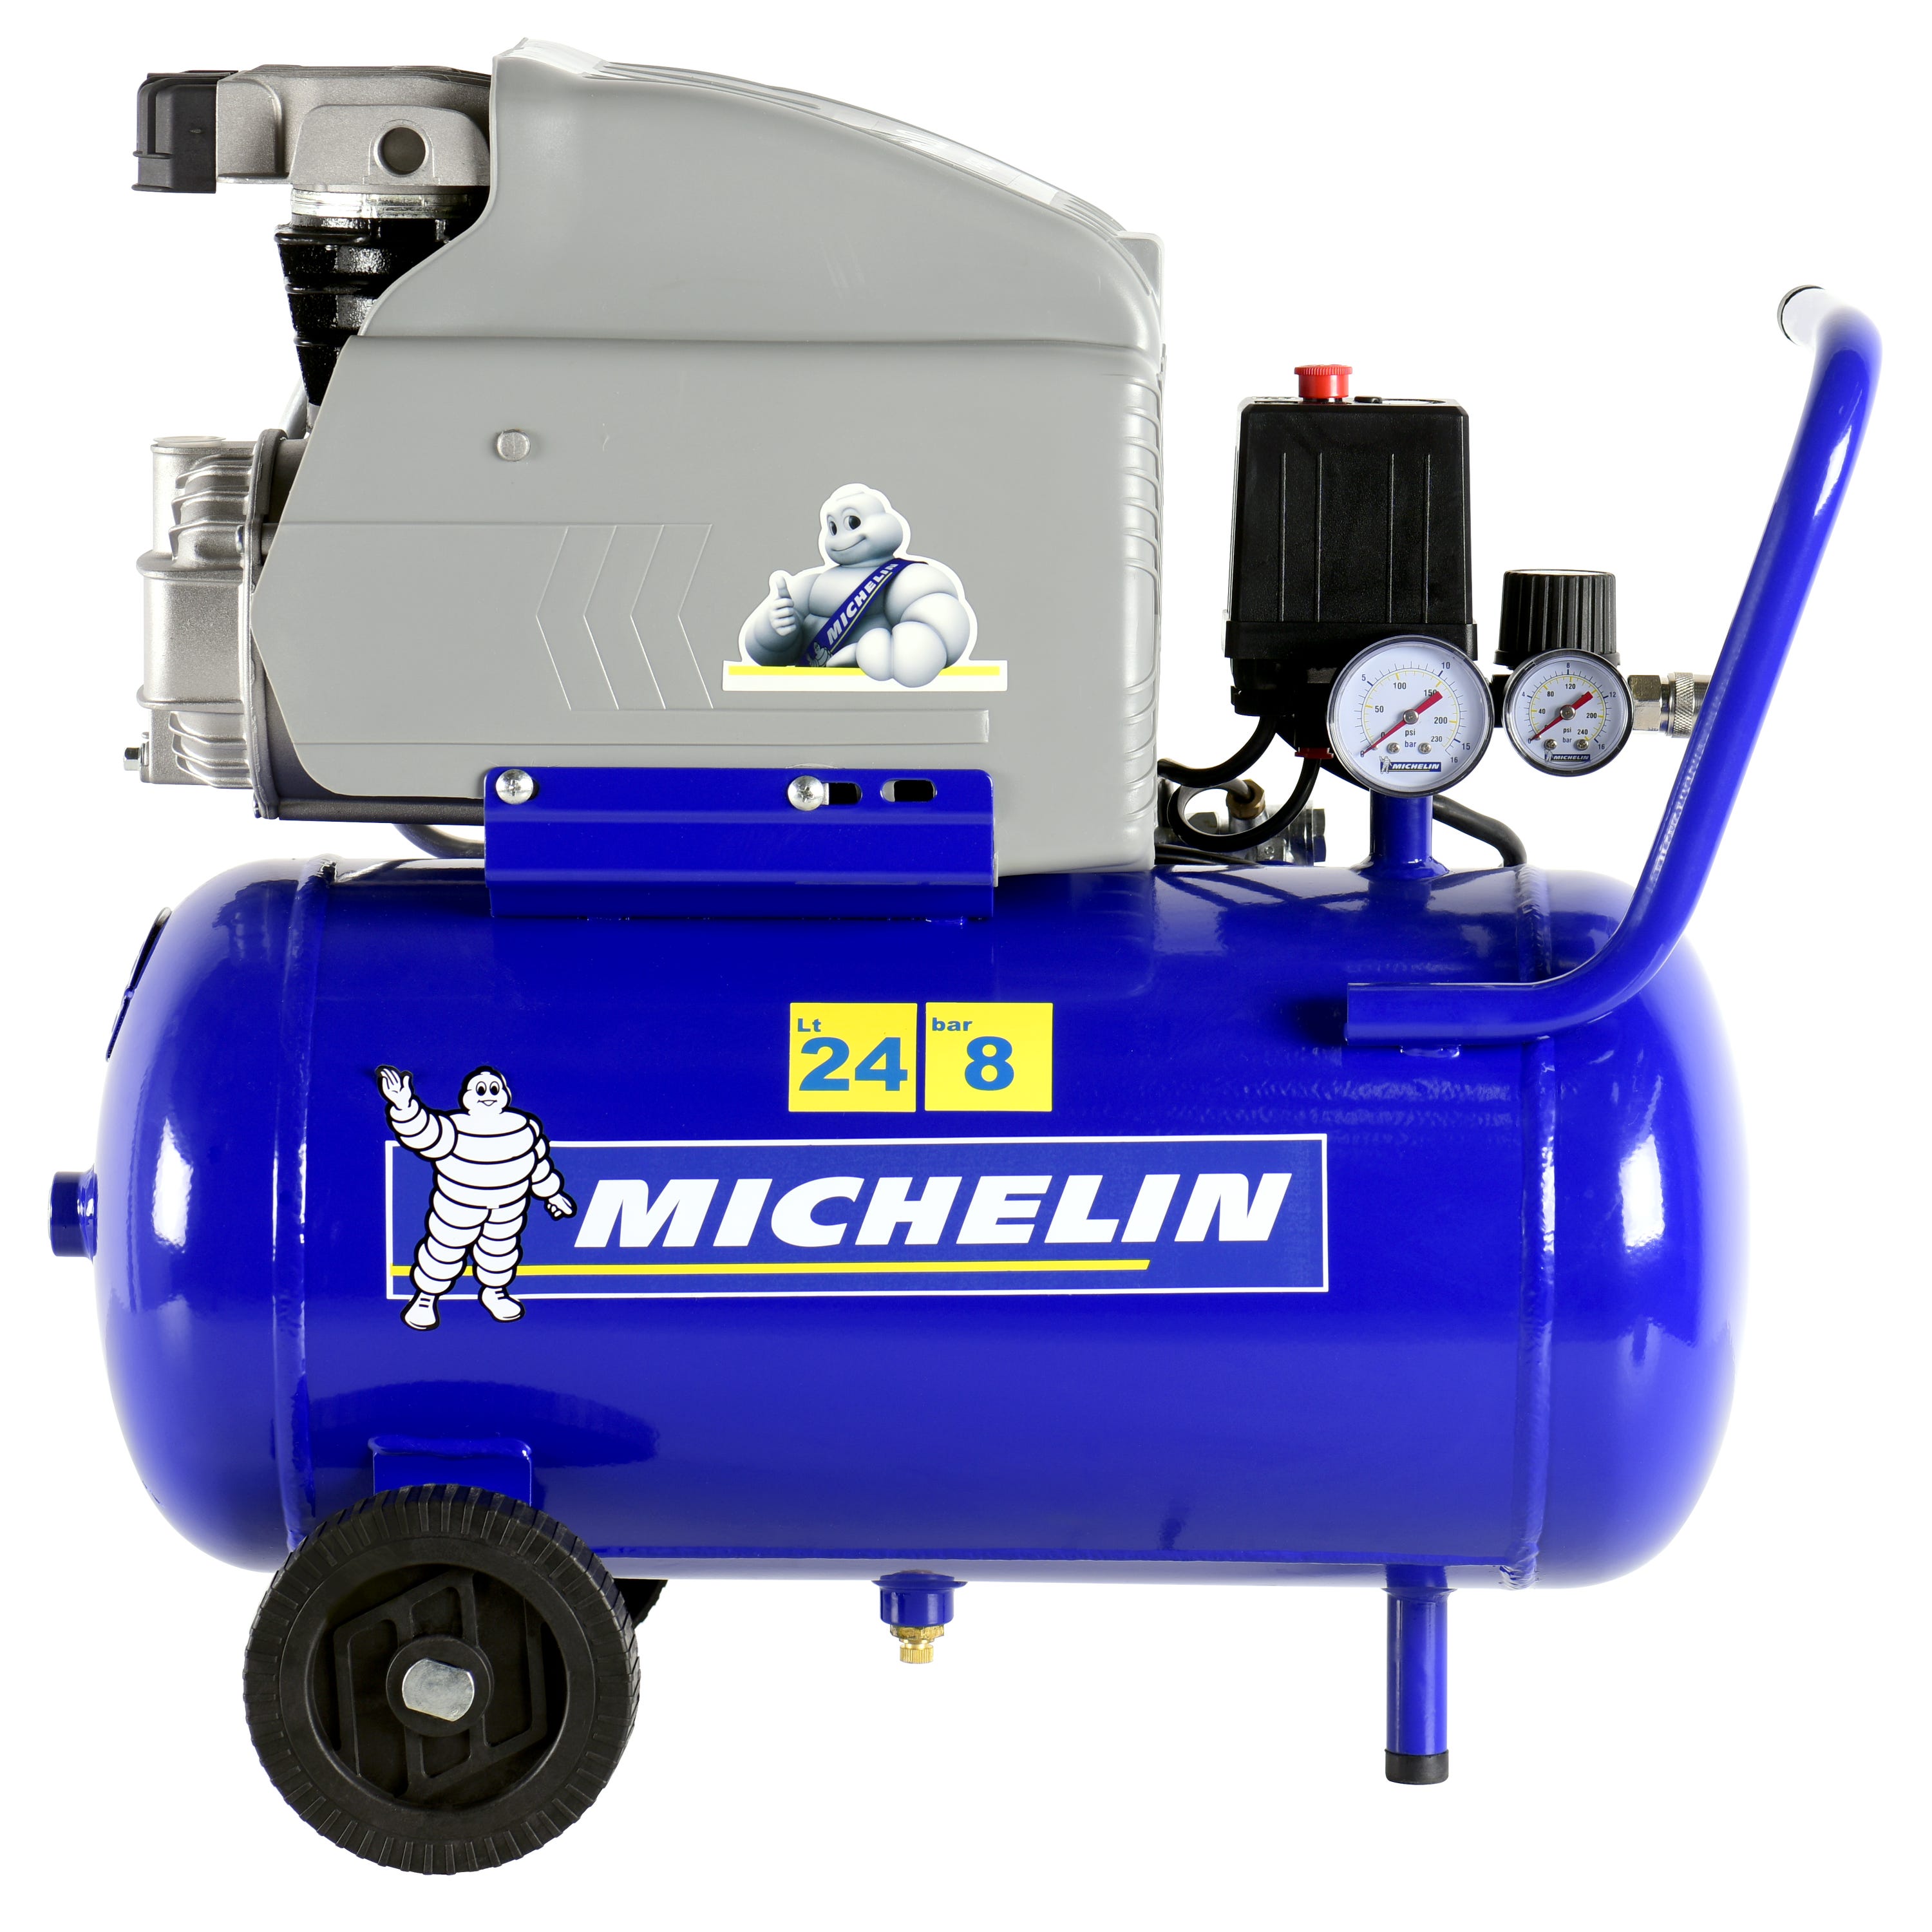 Michelin Compresseur + Cuve 24l Mb24